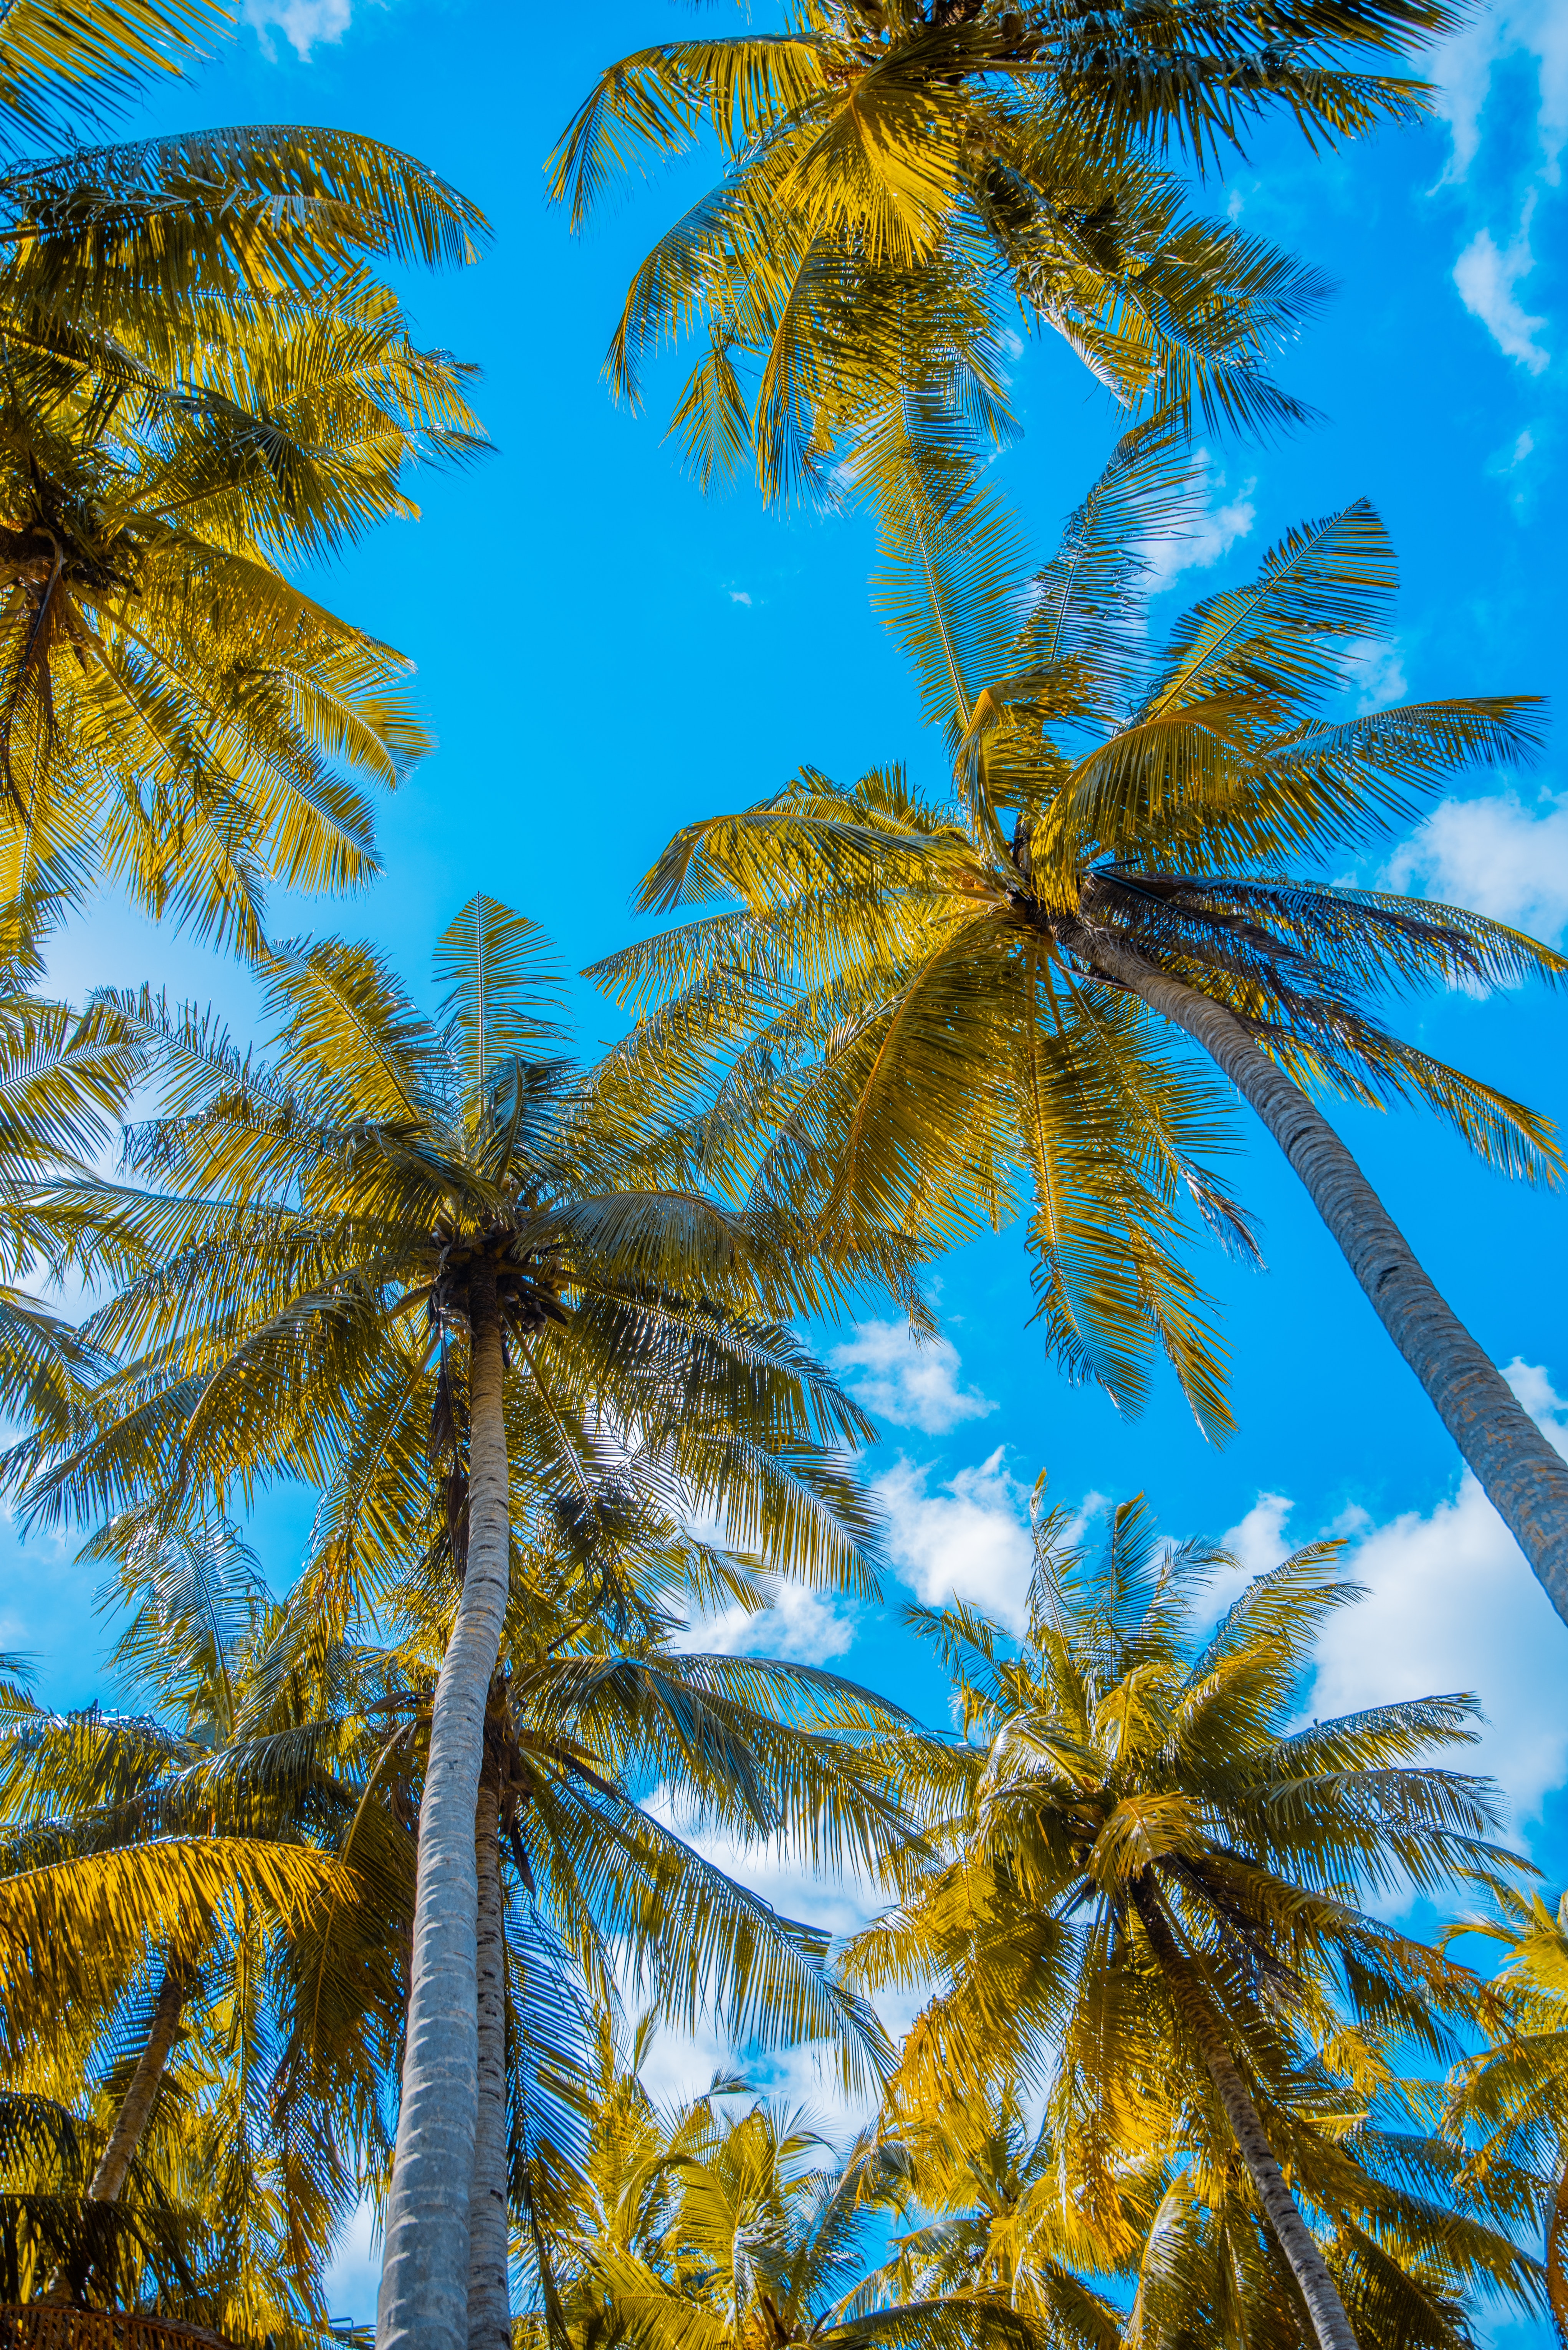 Descarga gratis la imagen Naturaleza, Cielo, Nubes, Verano, Palms, Trópico, Zona Tropical en el escritorio de tu PC